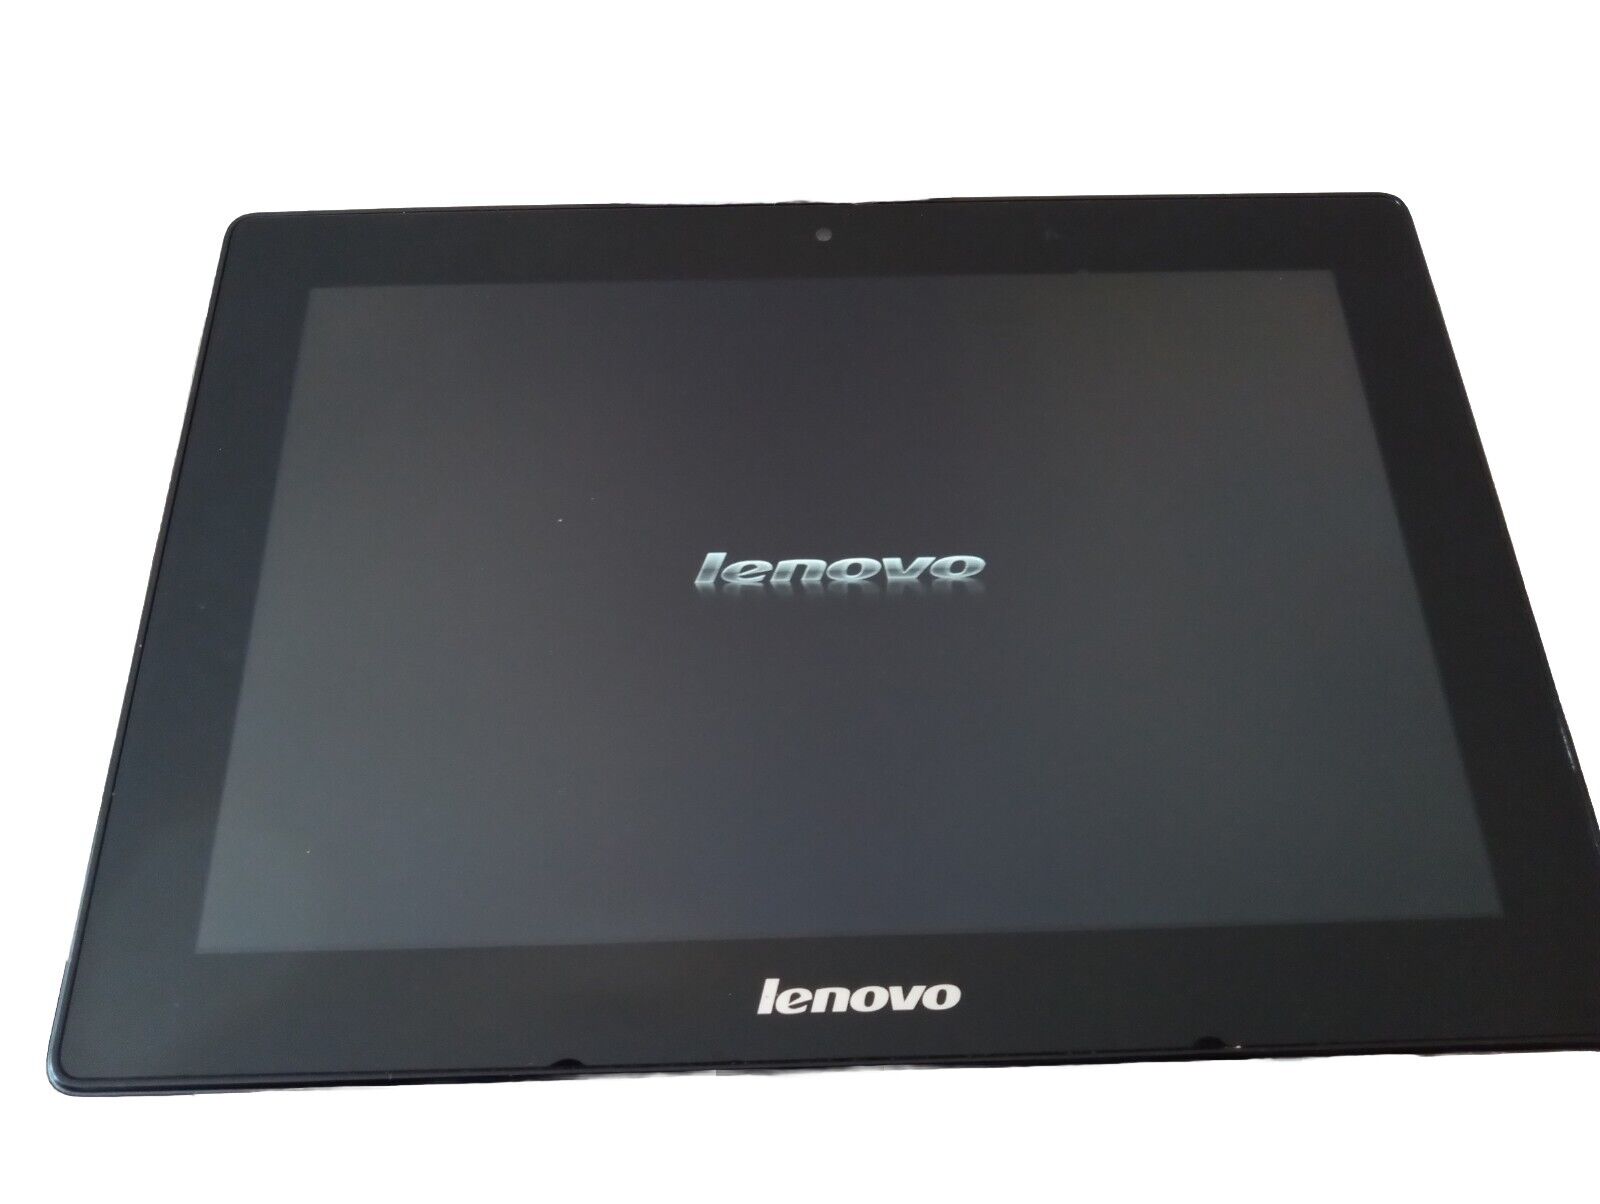 Lenovo IdeaTab S6000 32GB, Wi-Fi, 10.1in - Black